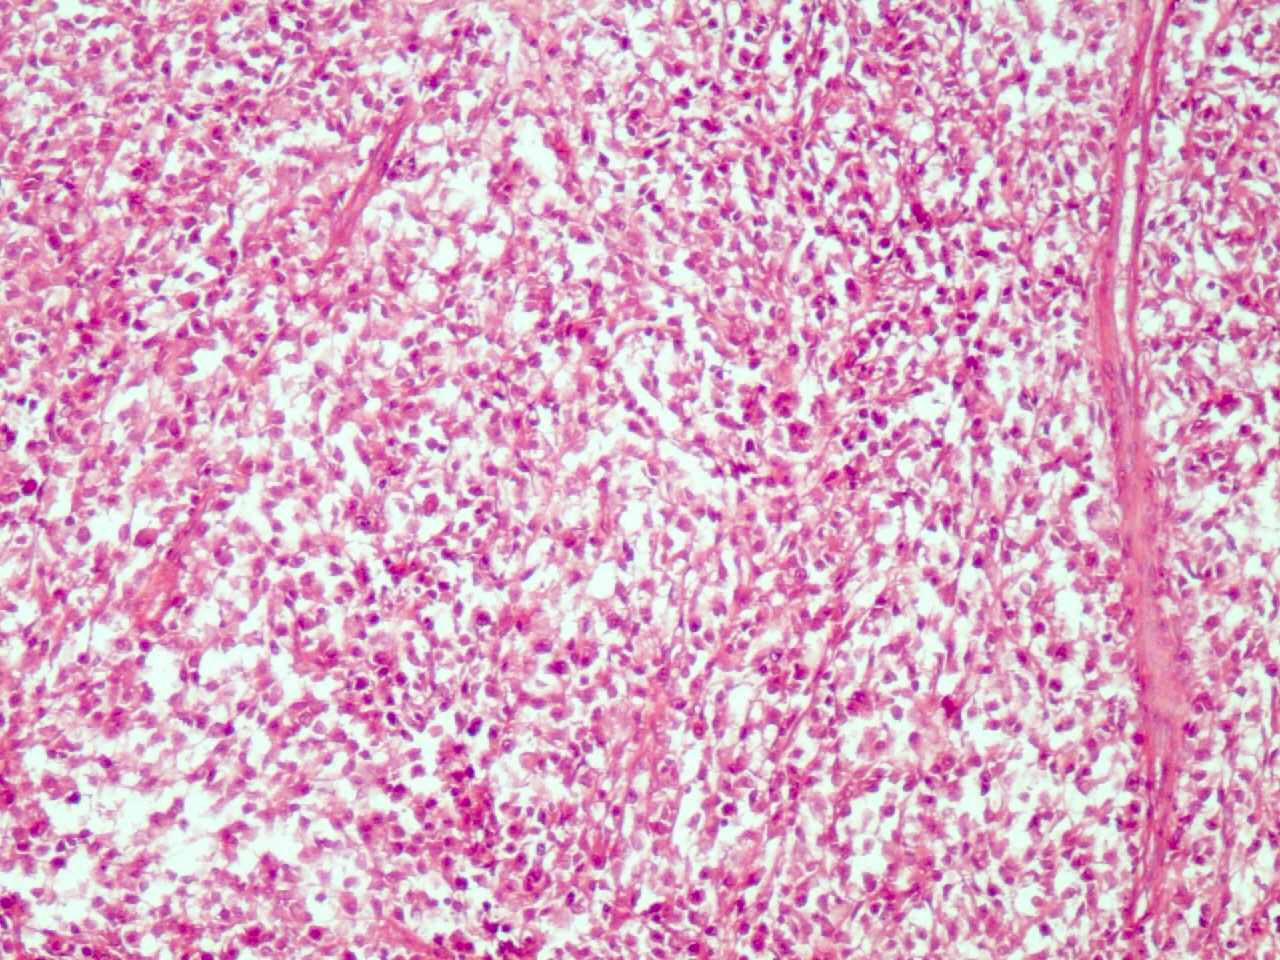 Diffuse large B cell lymphoma